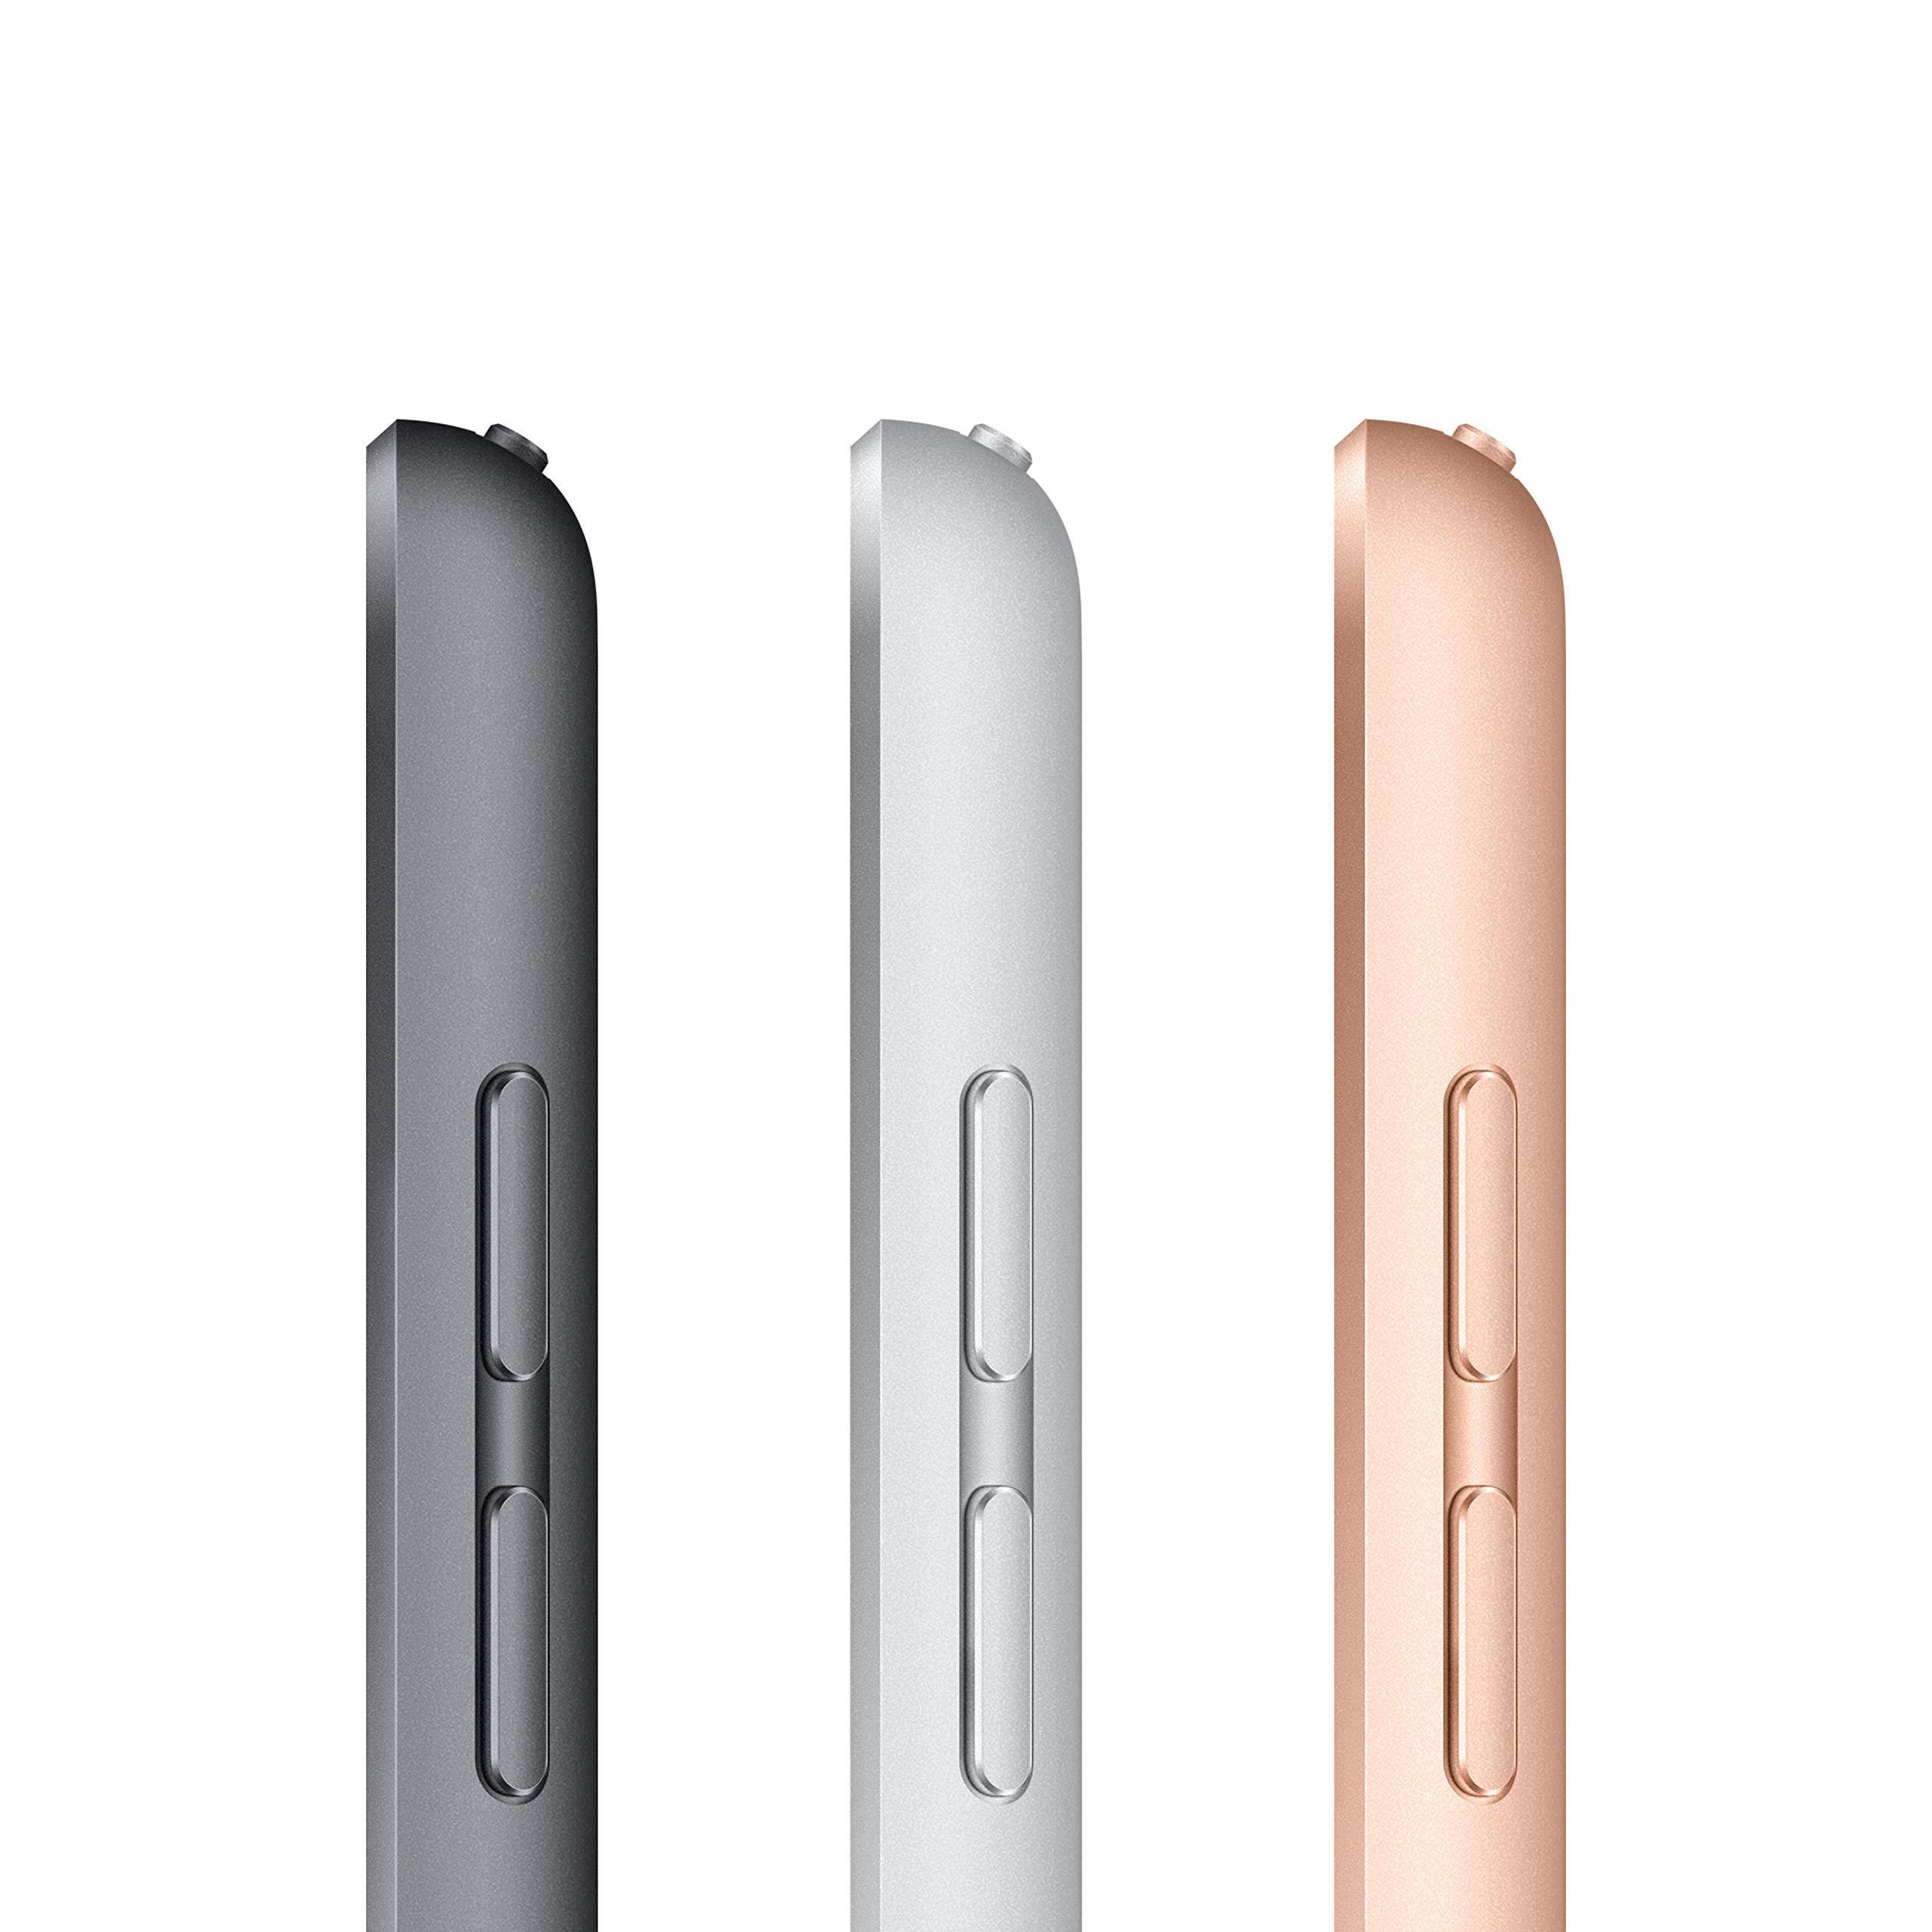 Apple 2020 iPad (10.2-inch, Wi-Fi, 128GB) - Gold (8th Generation)